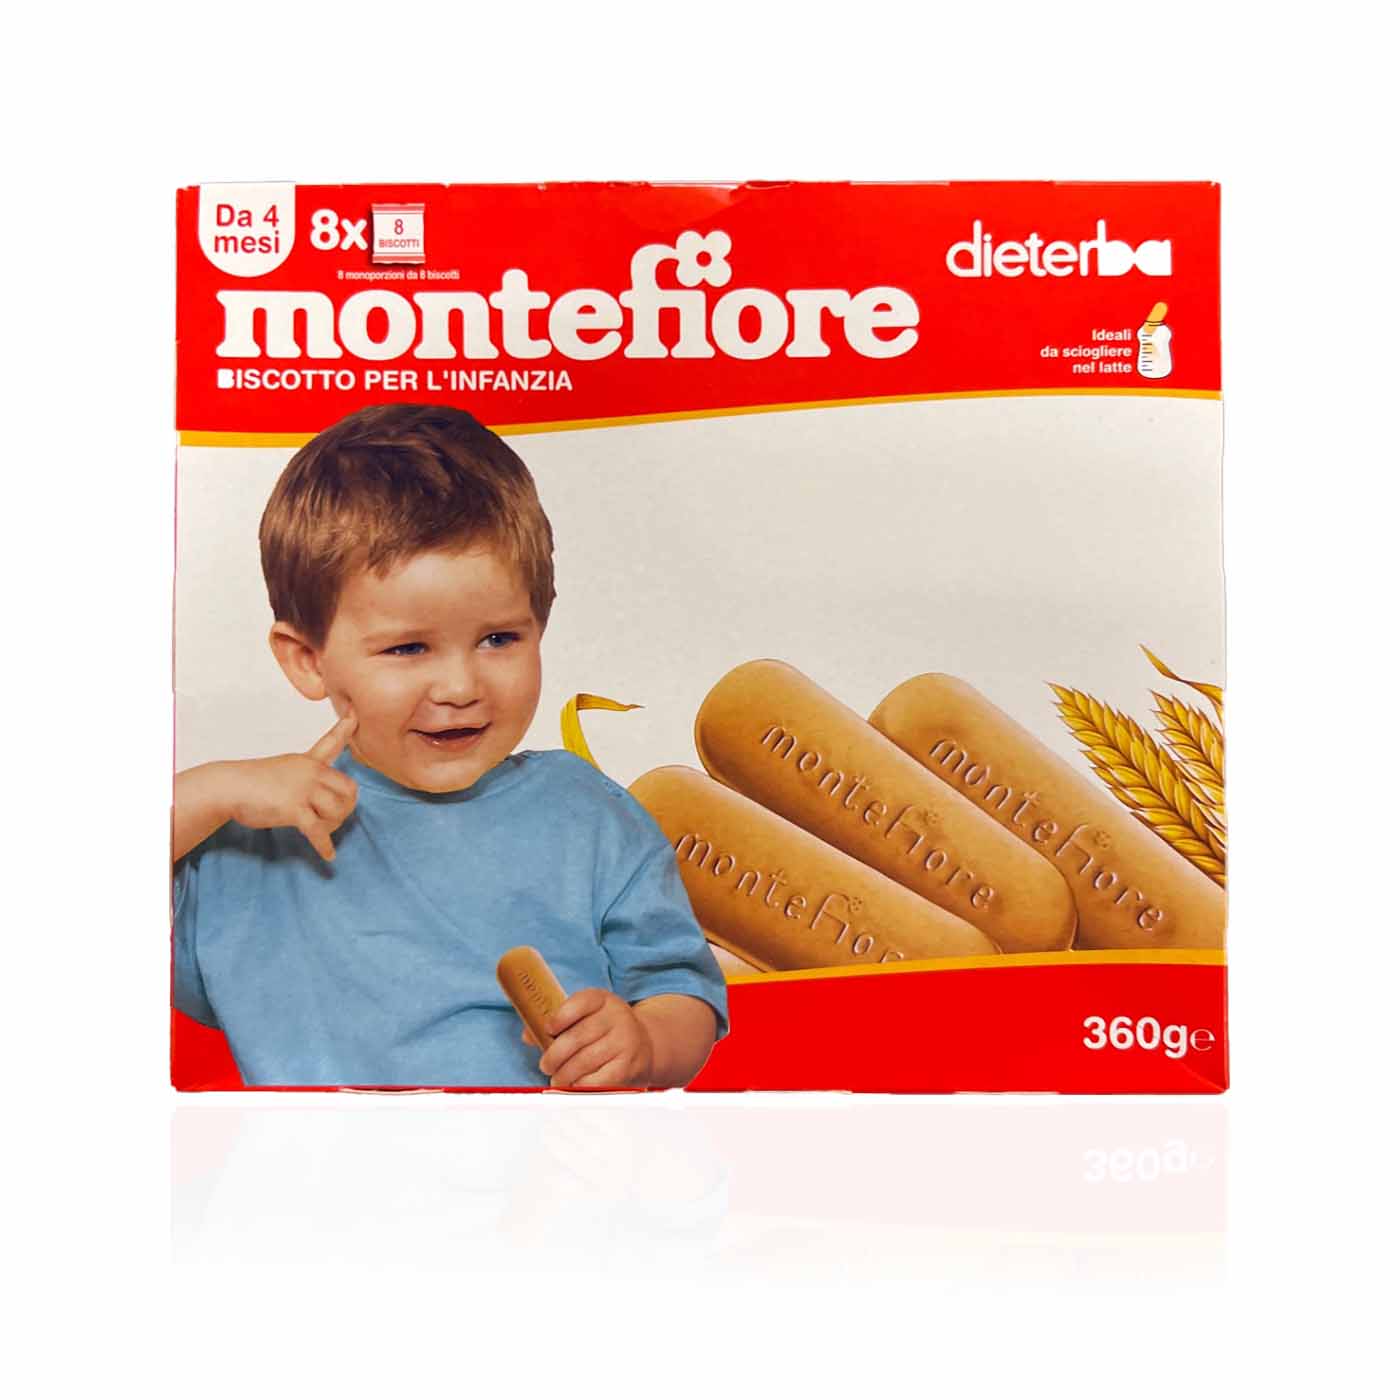 MONTEFIORE Biscotti Infanzia- Kinderkeks ab dem 4. Lebensmonat- 0,360kg